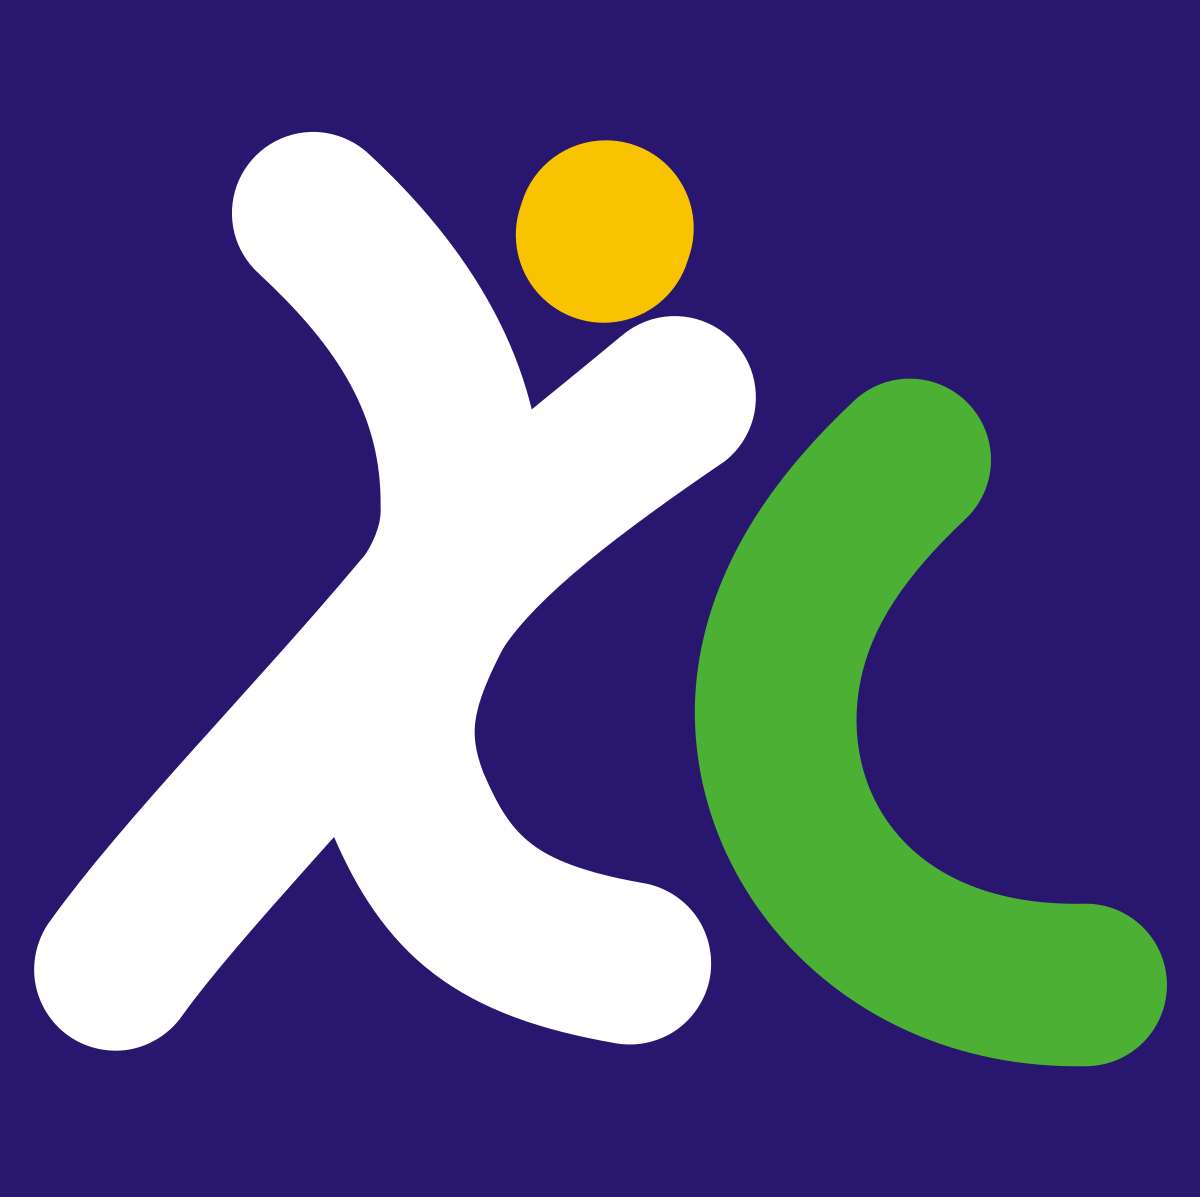 File:XL 2004.svg - Wikimedia Commons